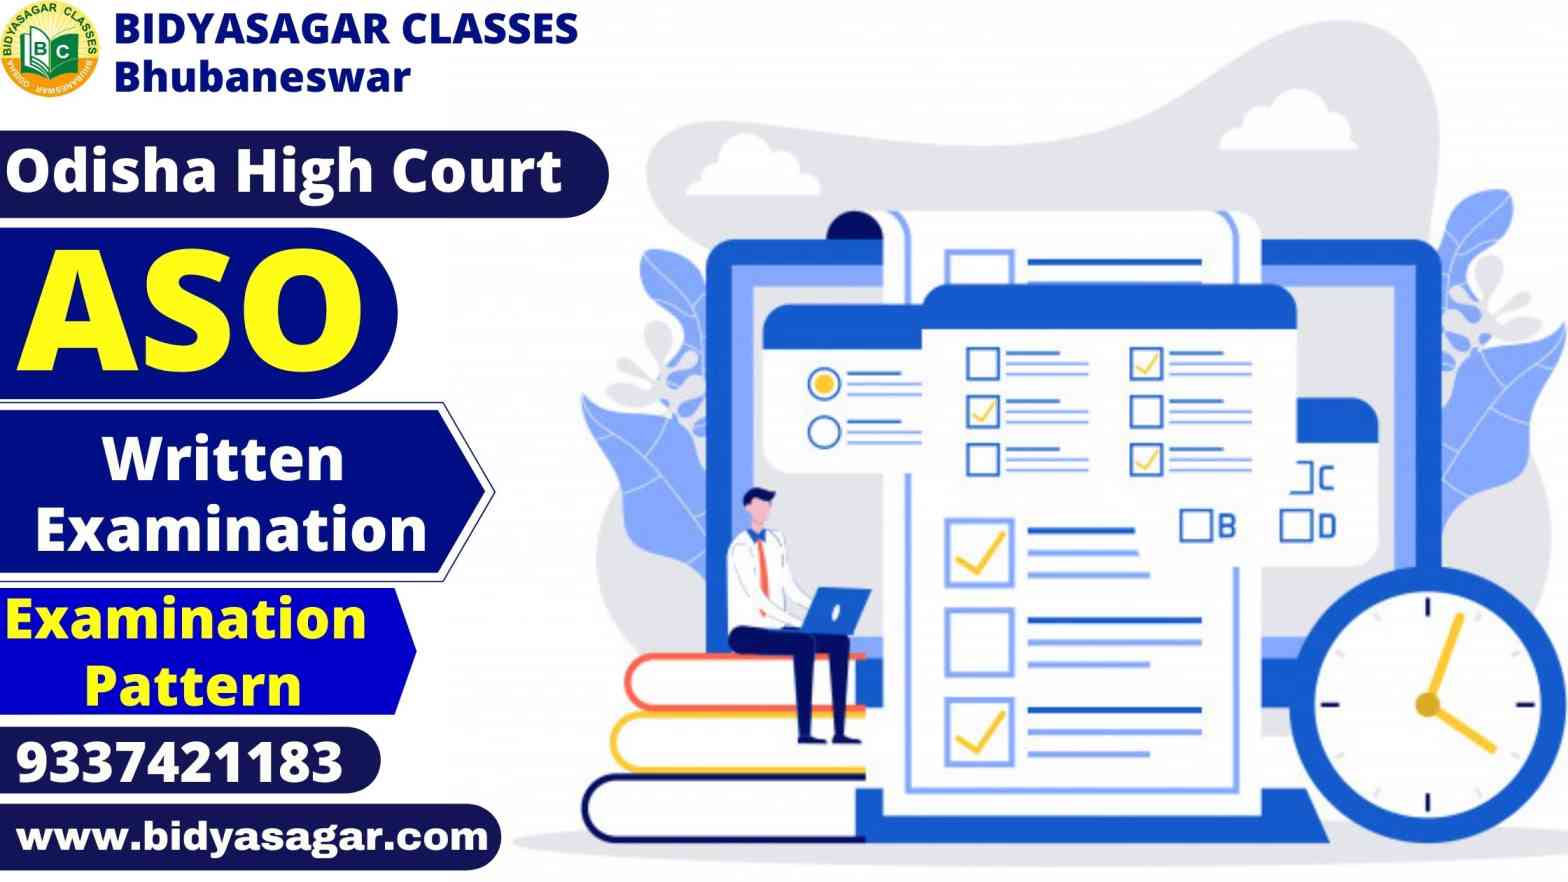 Odisha High Court ASO Written Examination Exam Pattern